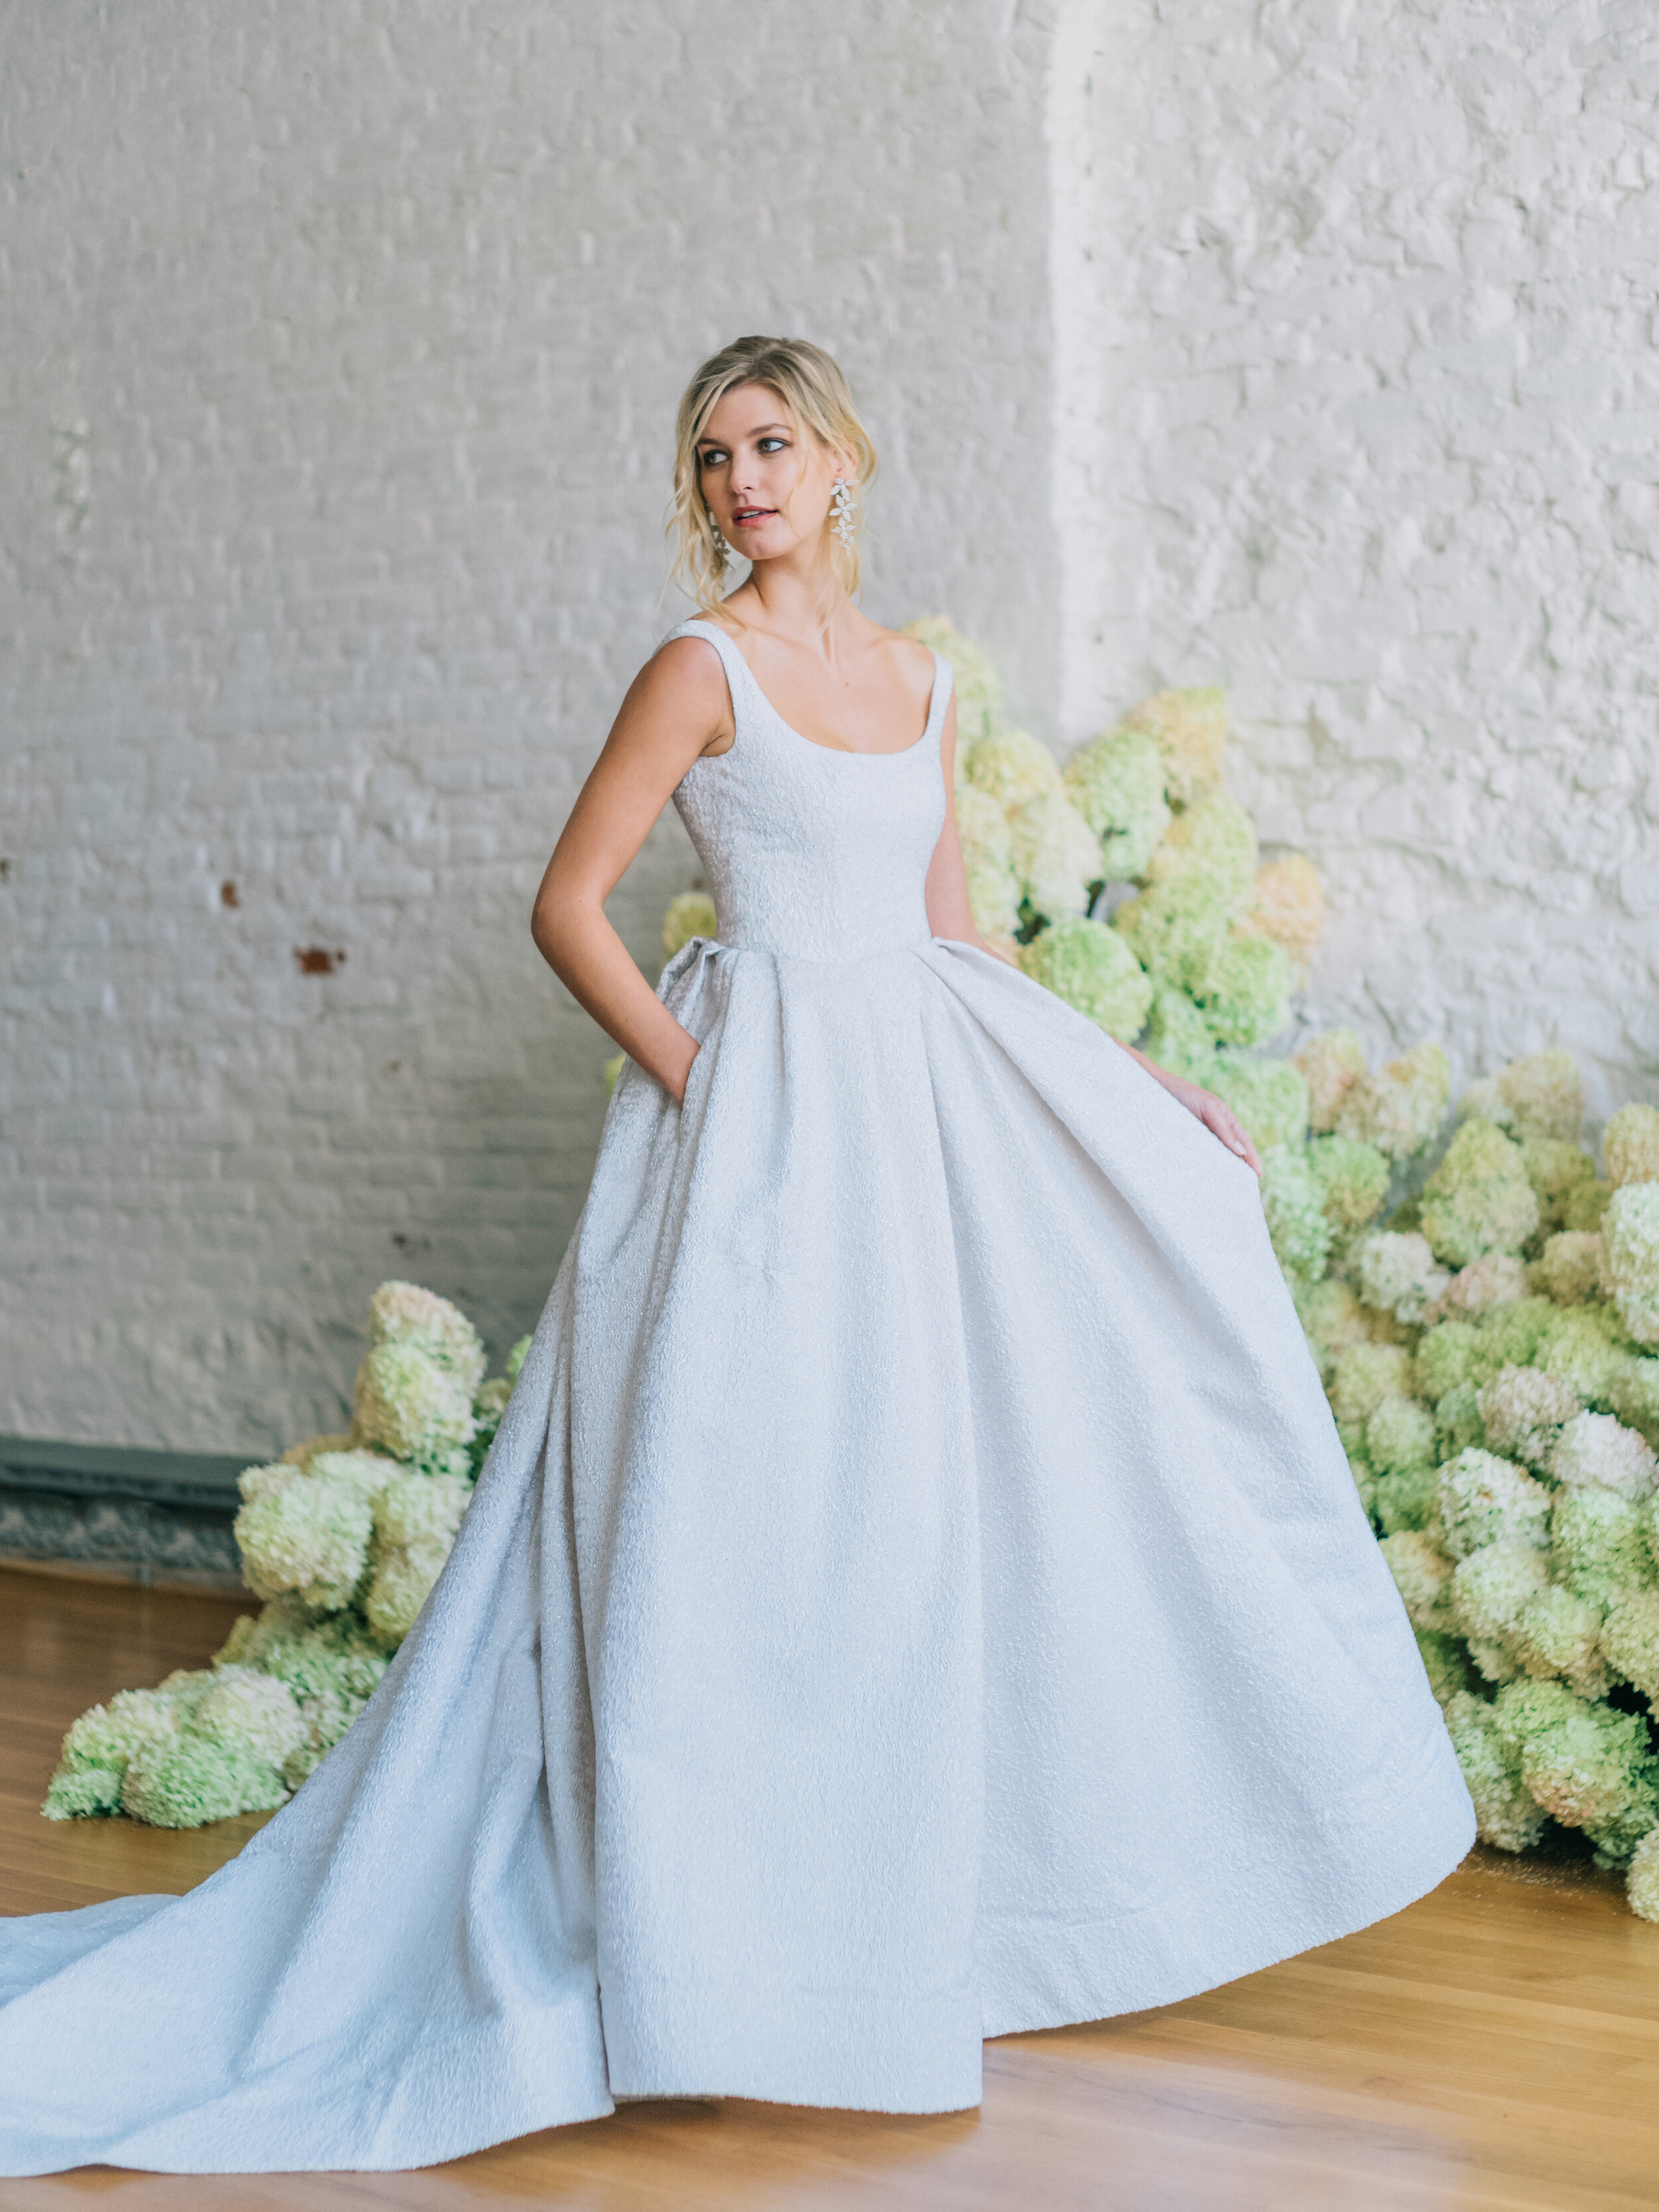 Eyre full textured silver wedding gown by bridal designer Carol Hannah2.jpg